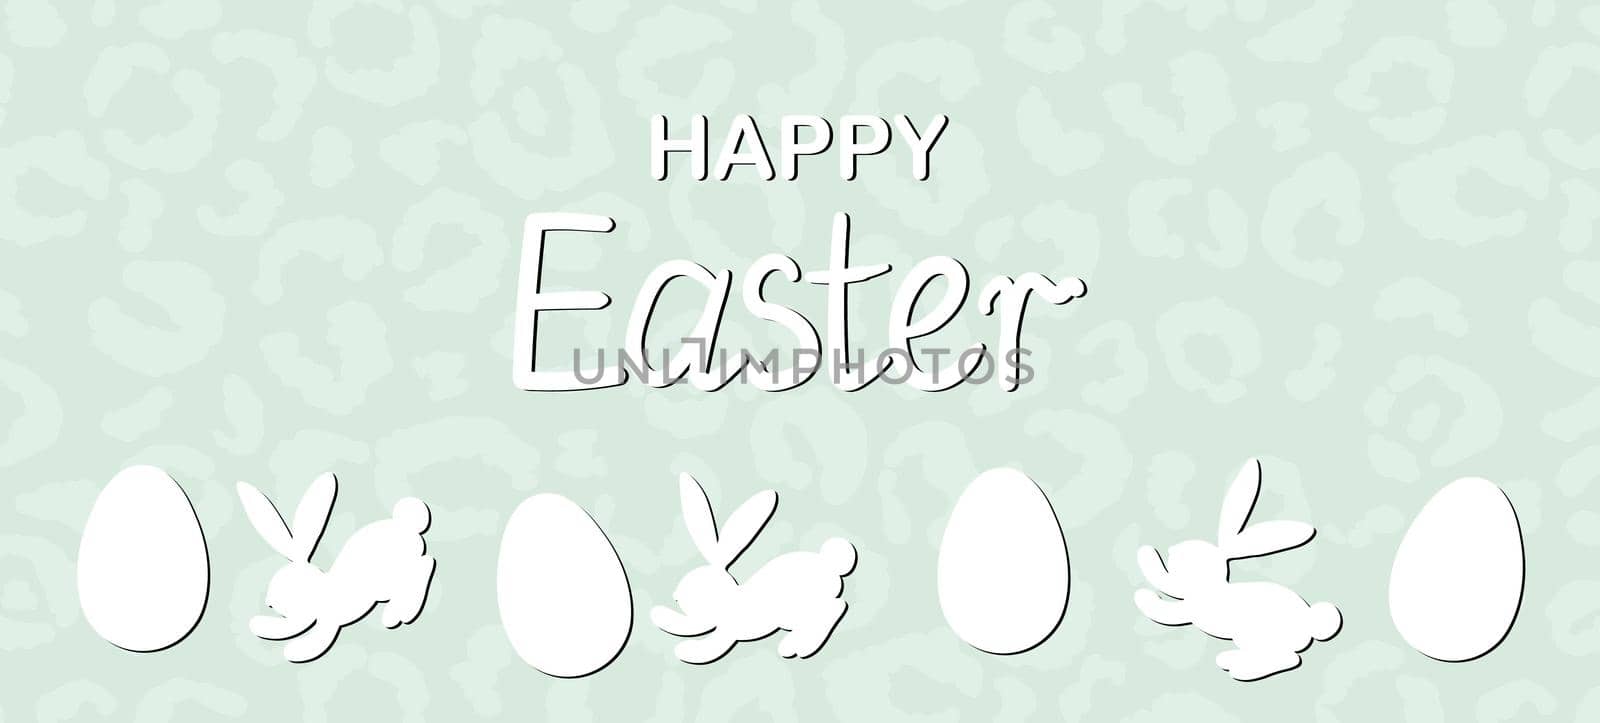 Easter background with eggs, rabbit. Happy Easter banner. Template design for greeting card, postcard, header for website, wallpaper, poster. Holiday modern frame. Vector stock illustration.